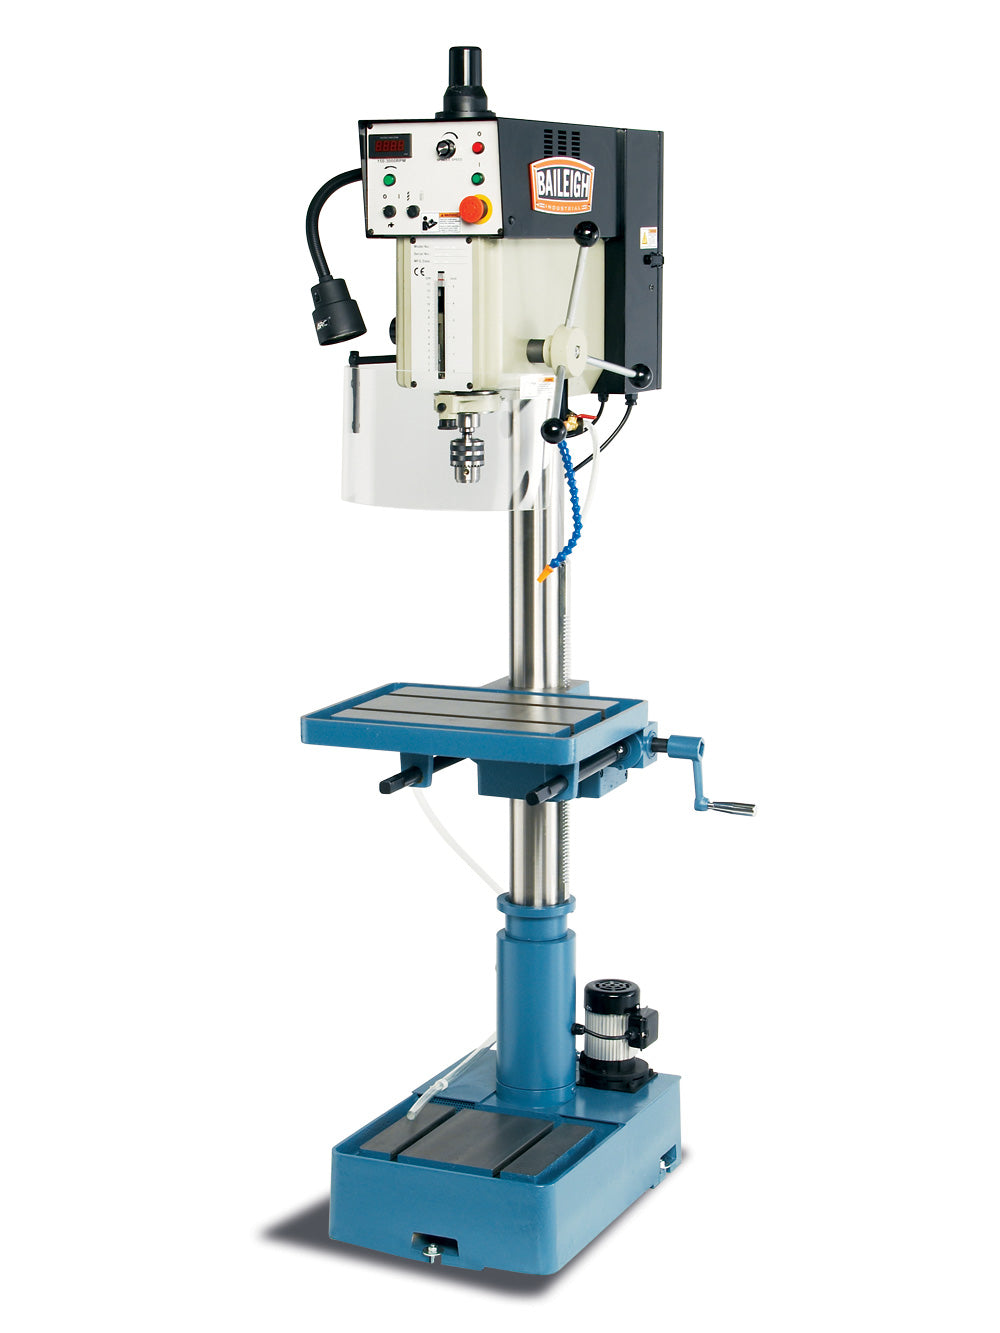 Baileigh DP-1000VS 220V 1 Phase Inverter Driven Drill PressManual Feed 1" Mild Steel Drilling Capacity